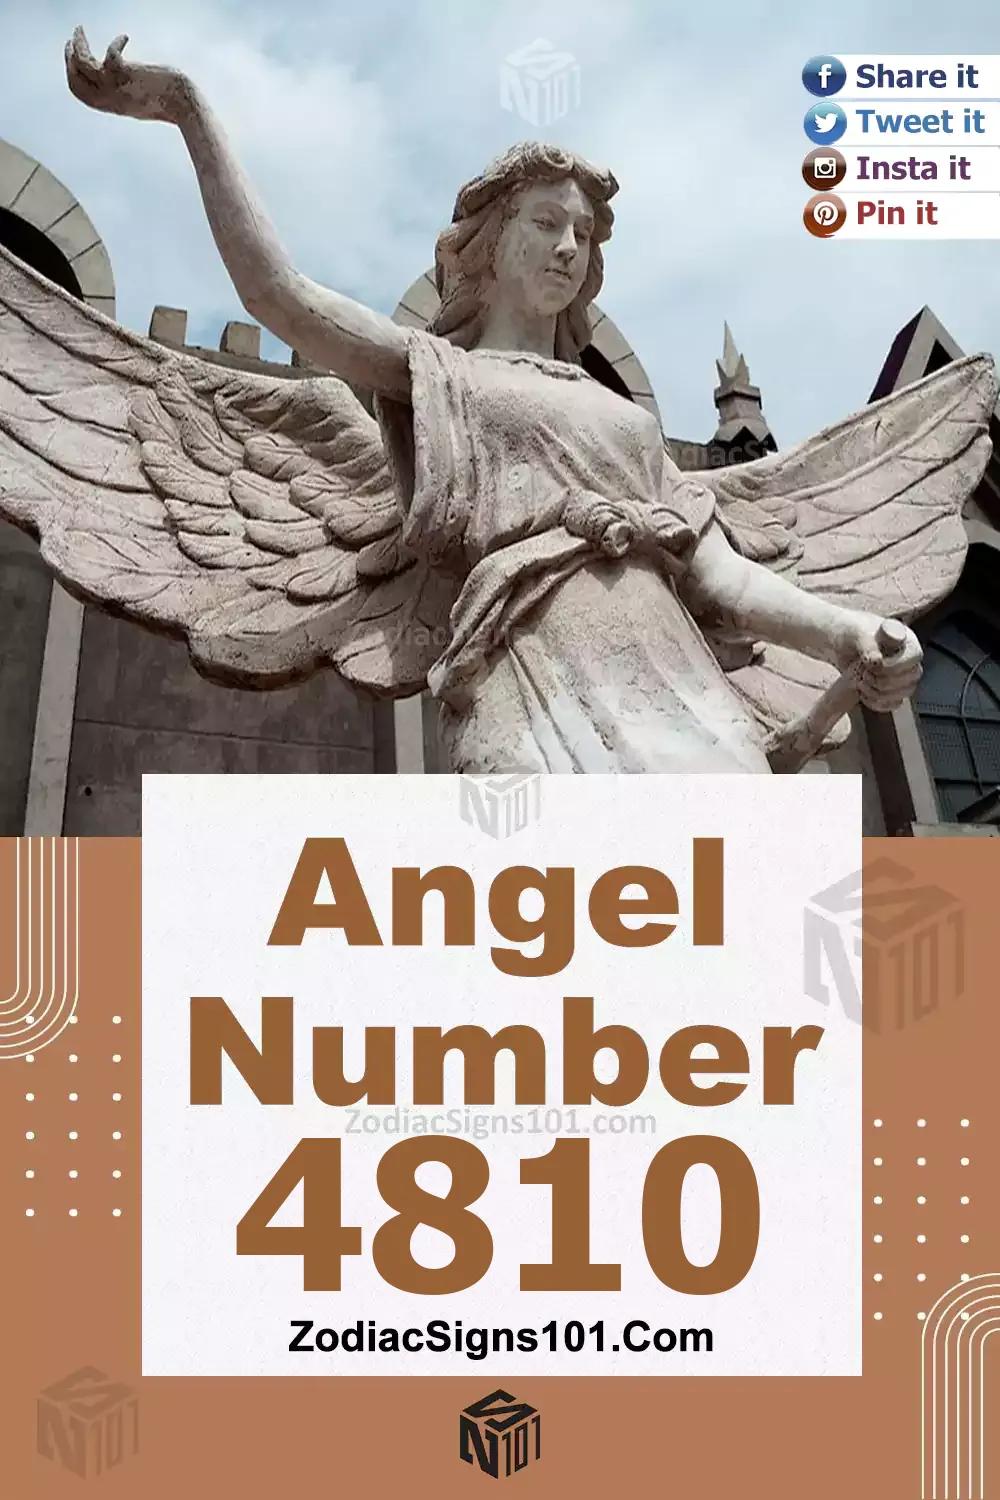 4810-Angel-Number-Meaning.jpg